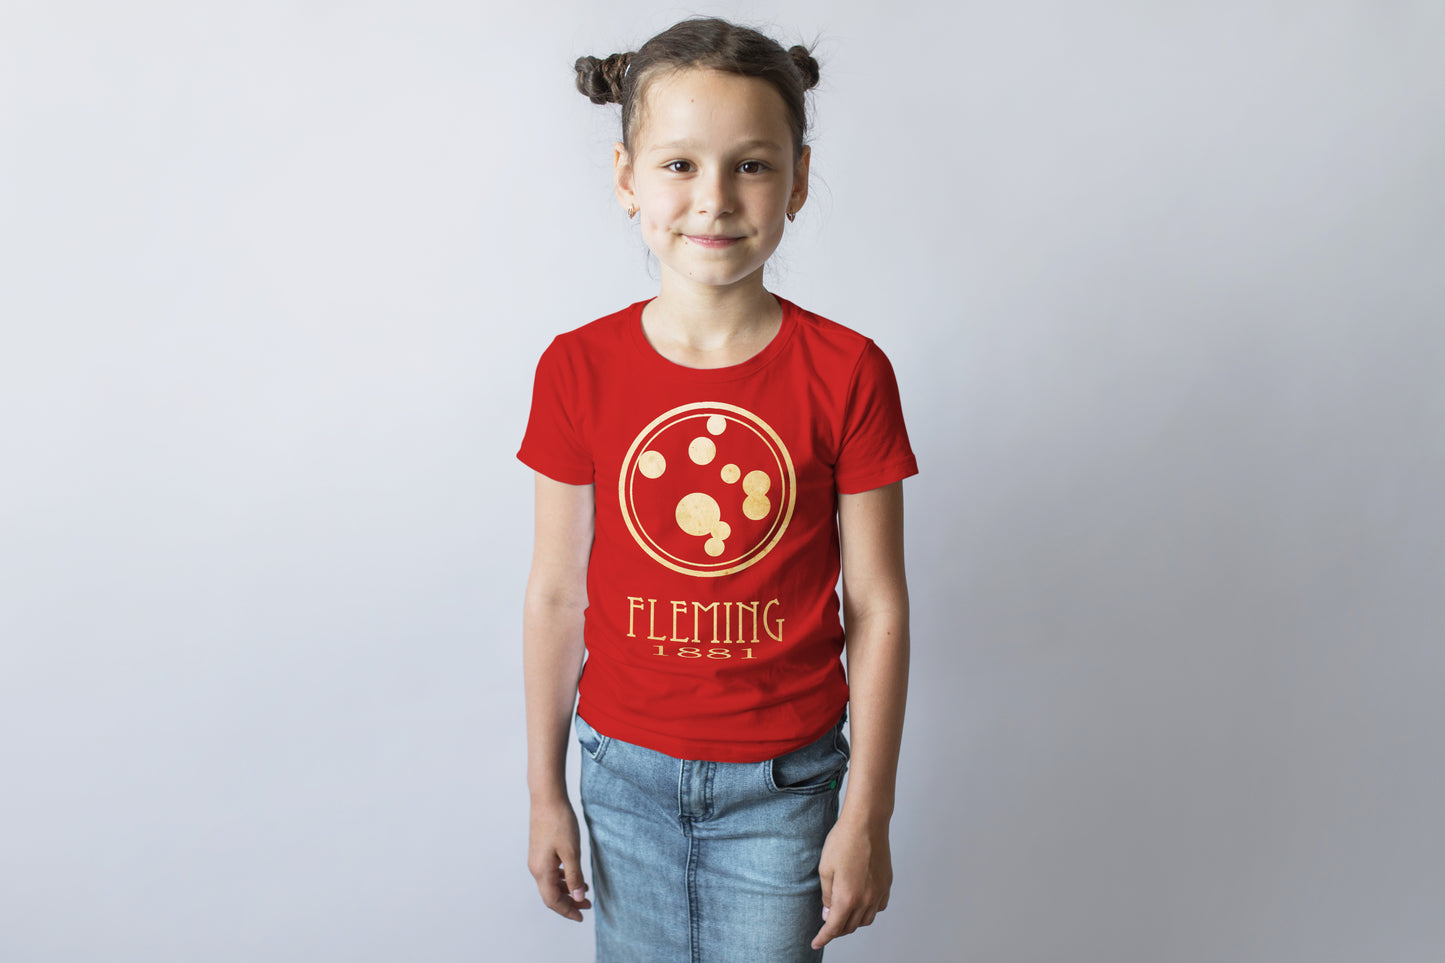 Fleming Microbiology T-shirt, Alexander Fleming Petri Dish Graphic Tee